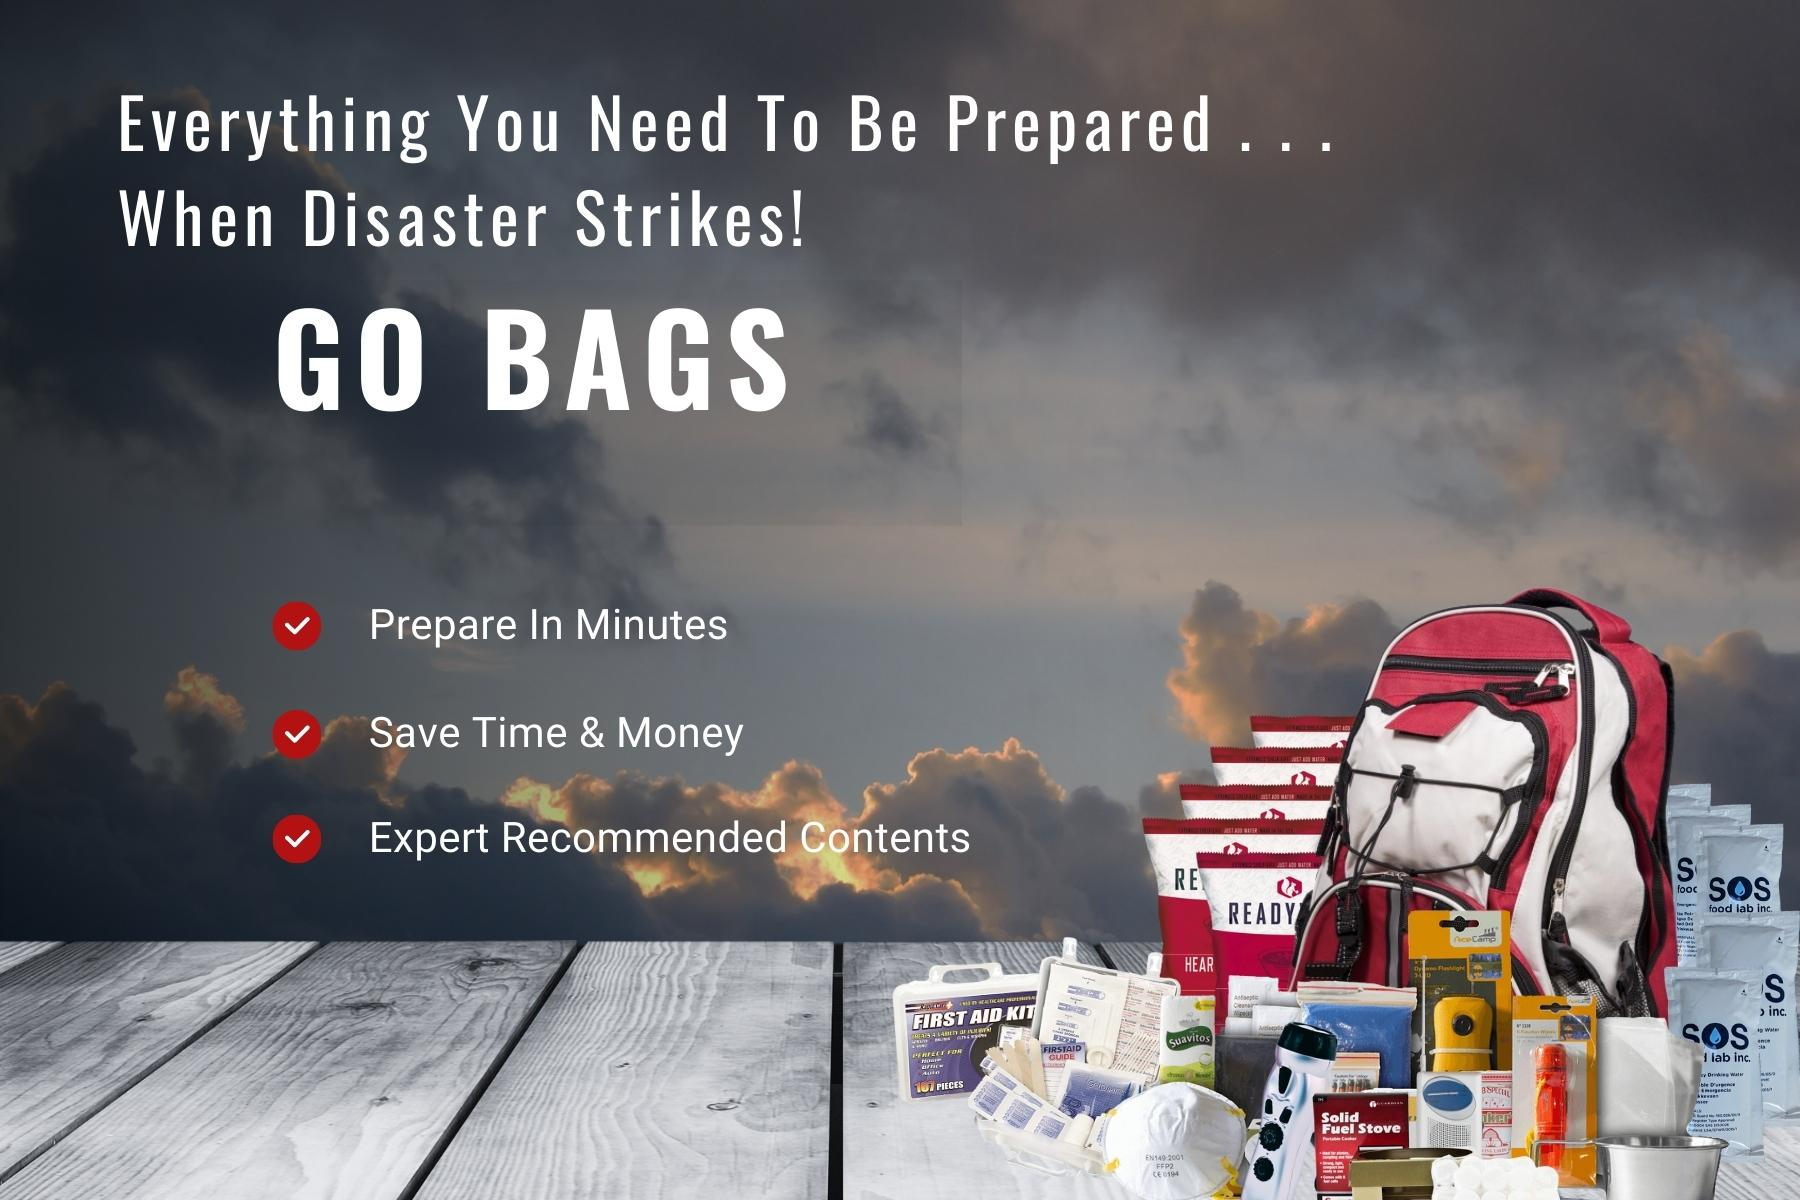 7 Go Bags JW  Survival Kits  Be Ready Bags ideas  go bags survival bags